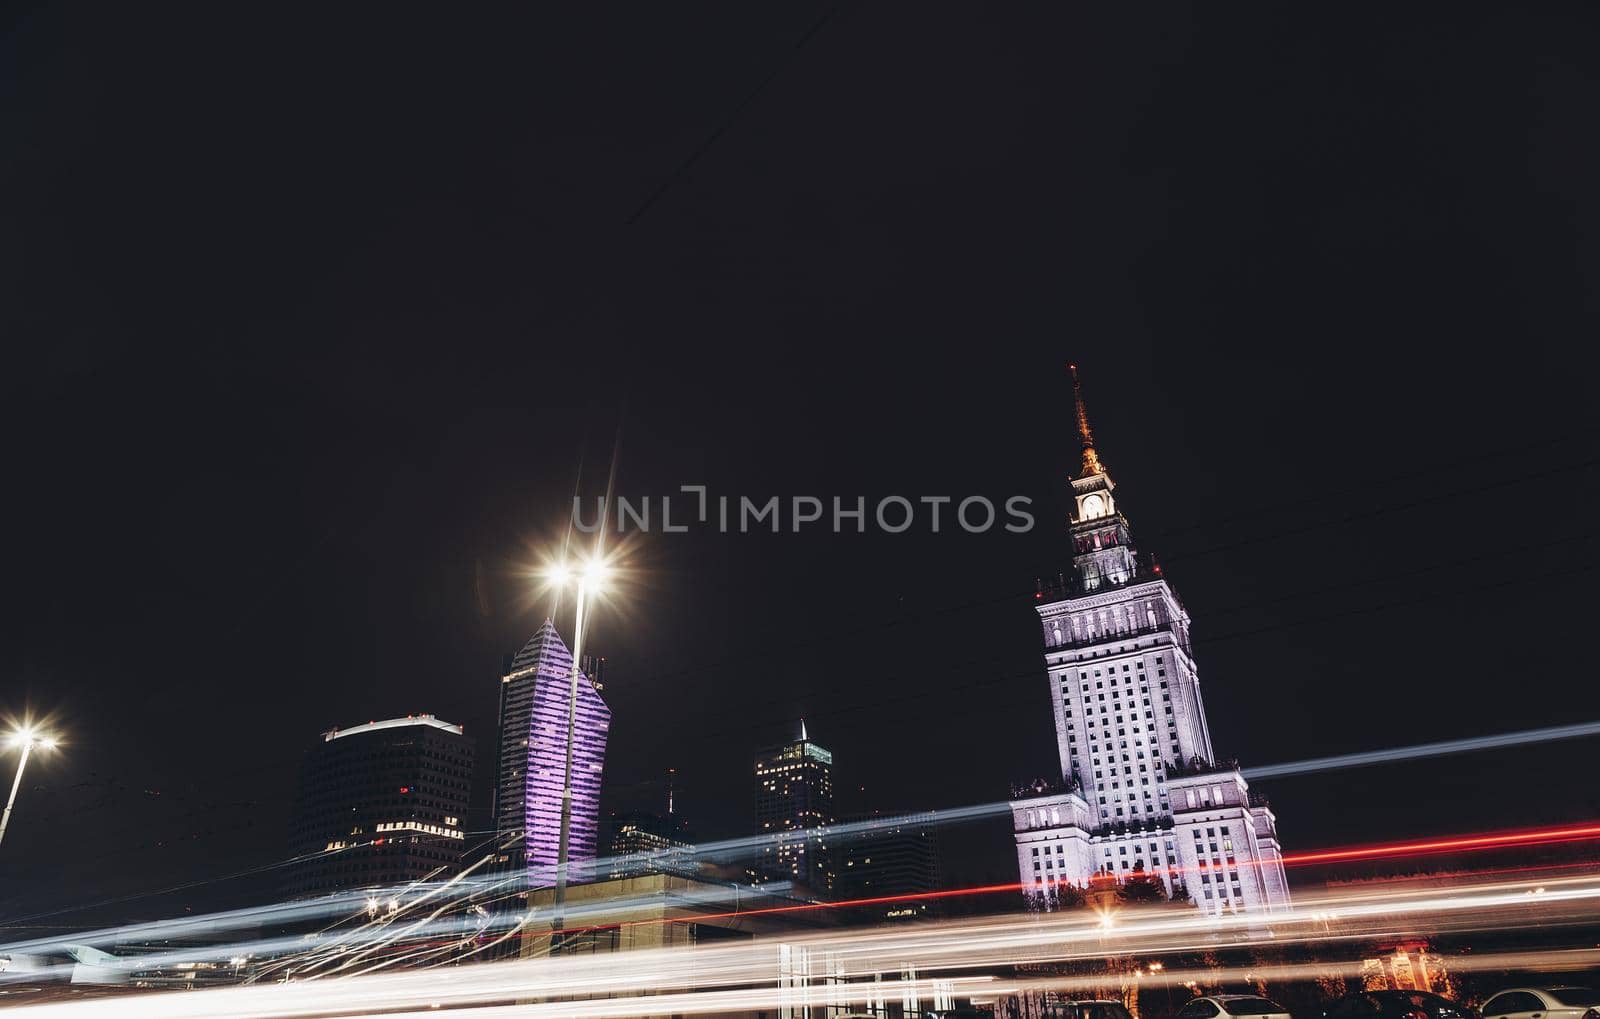 Warsaw Light Trails on City Street at Night - CAR LIGHT TRAILS Poland